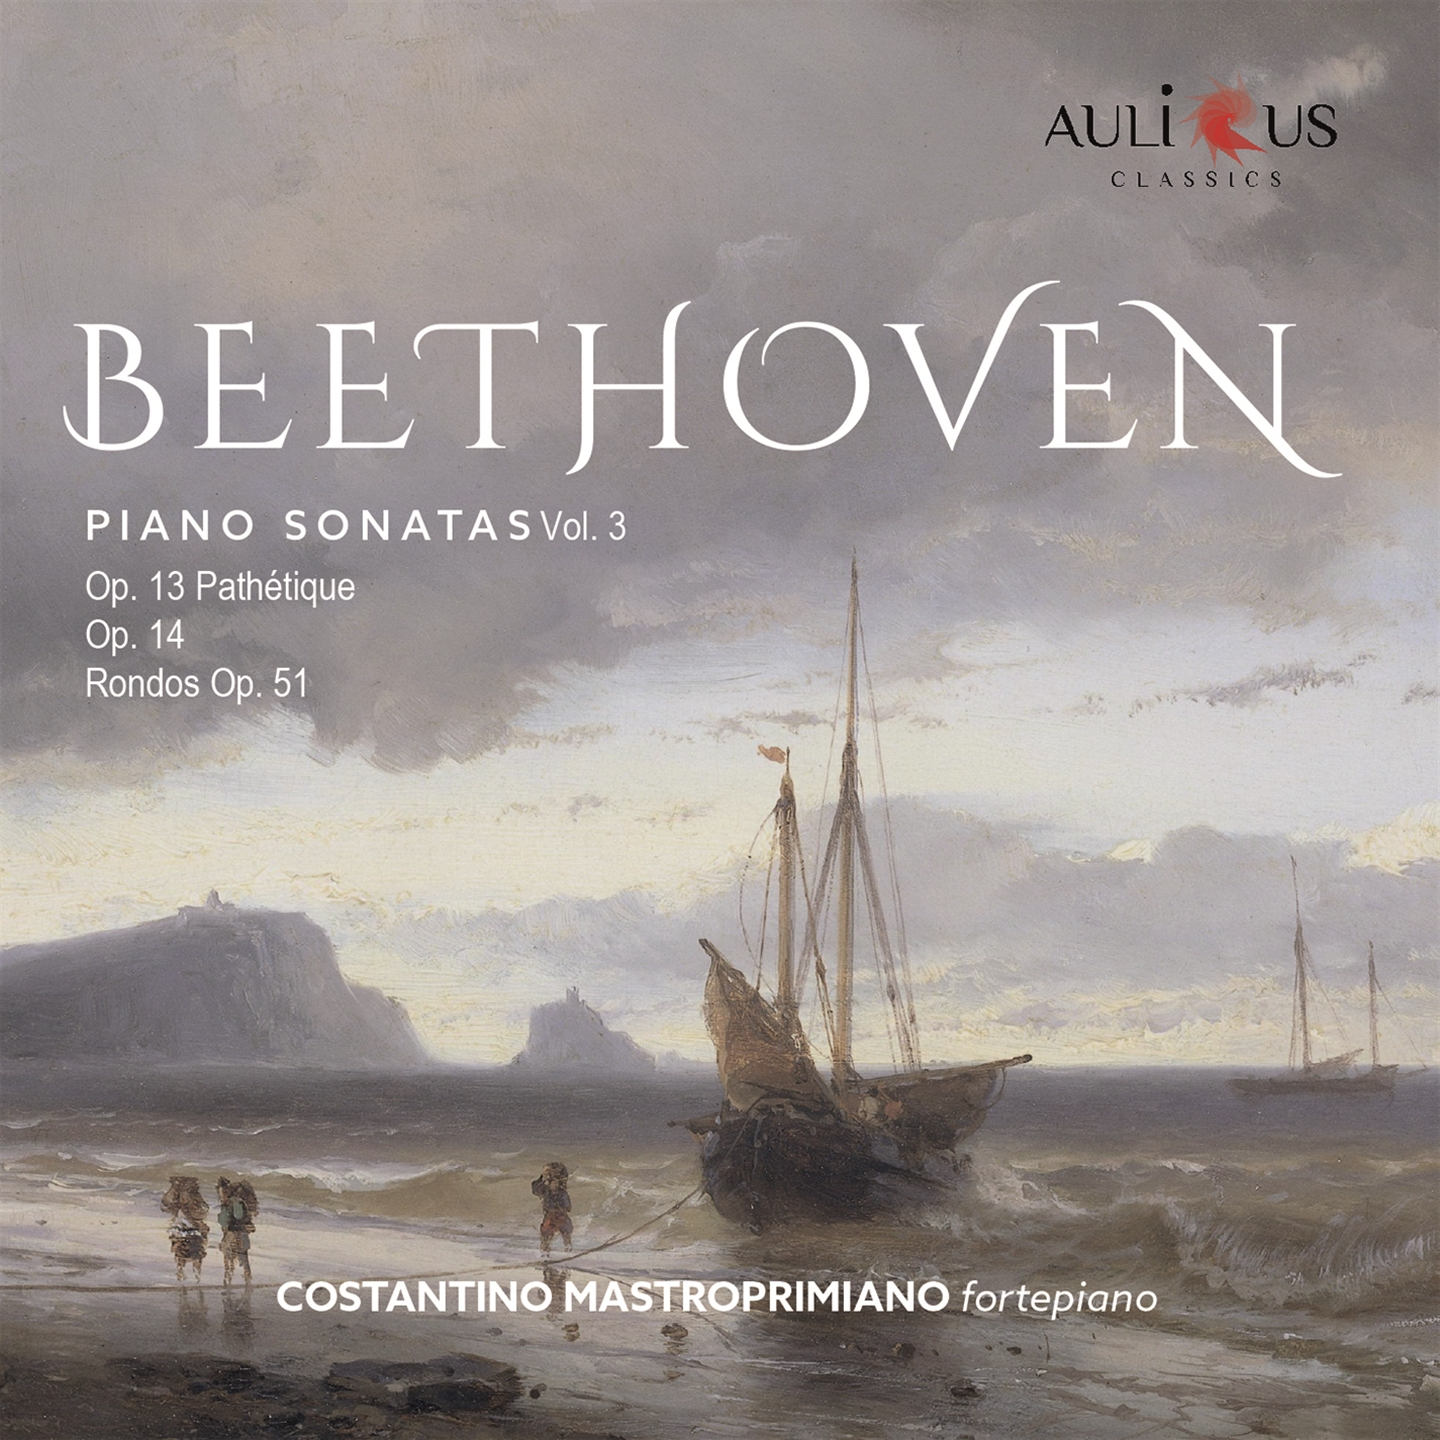 BEETHOVEN: PIANO SONATAS VOL.3 (OP. 13 / OP. 14 / RONDOS OP. 51)